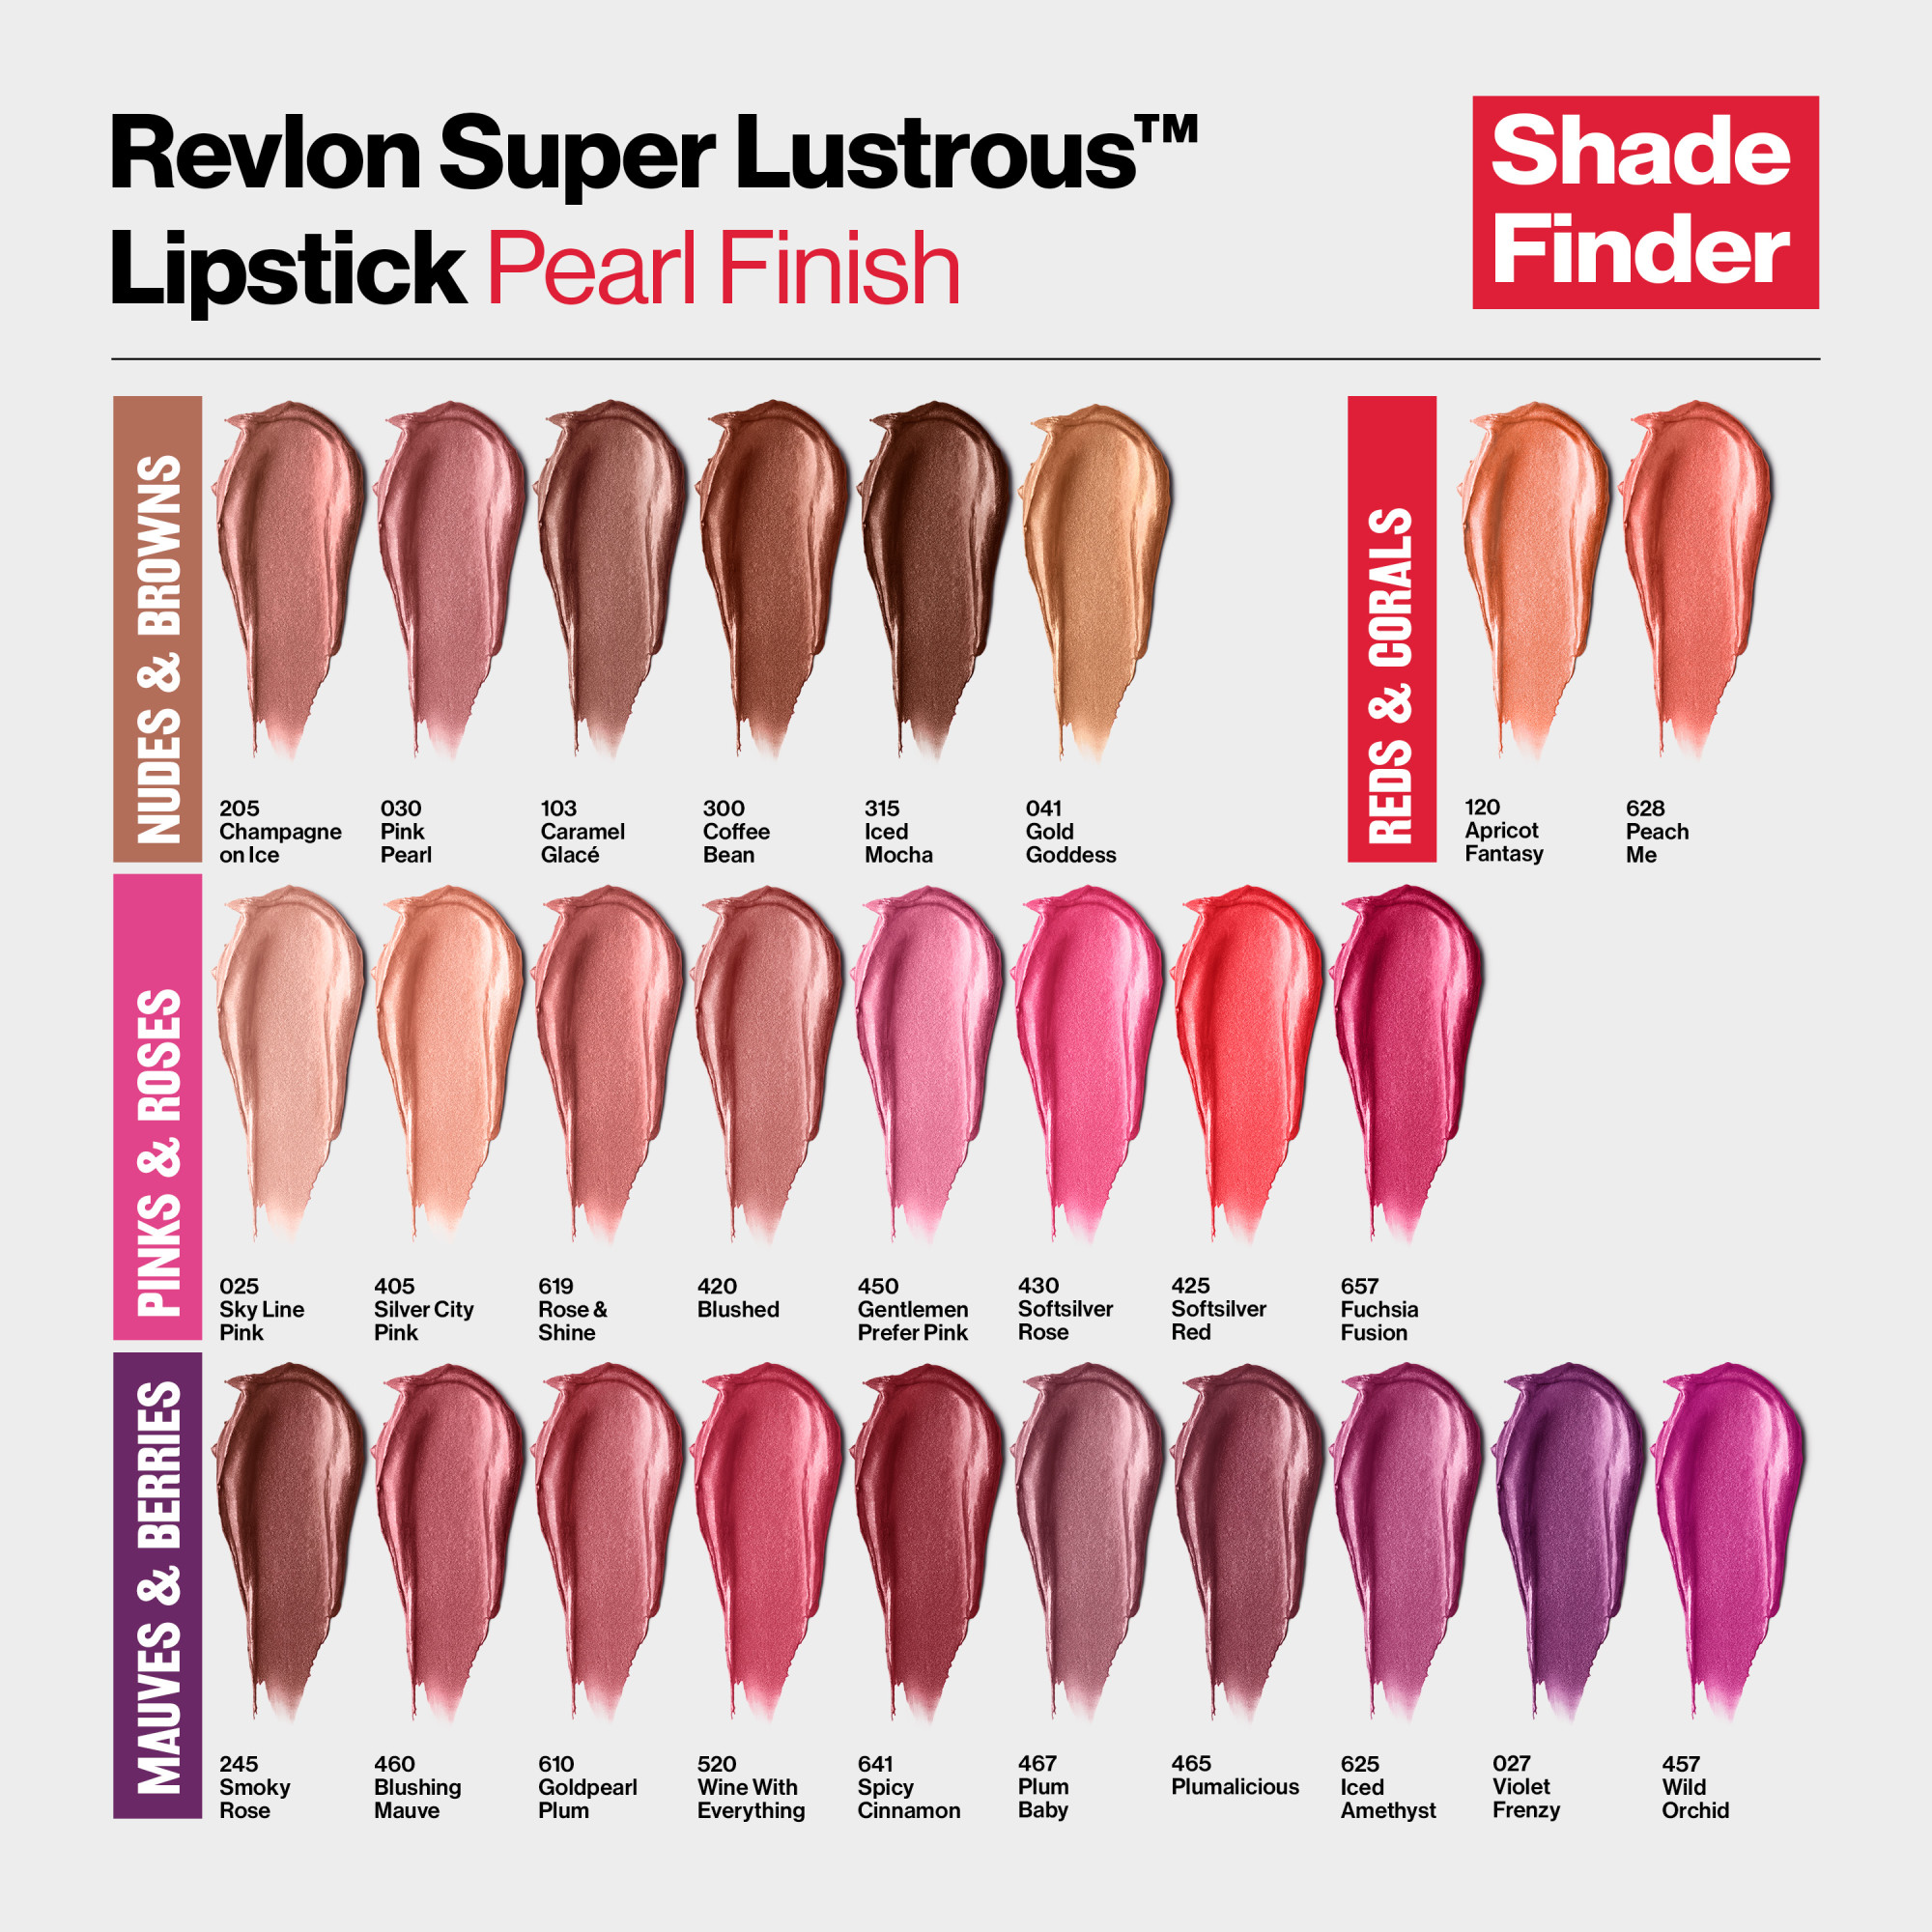 Revlon Super Lustrous Pearl Lipstick, Creamy Formula, 619 Rose & Shine, 0.15 oz - image 5 of 10